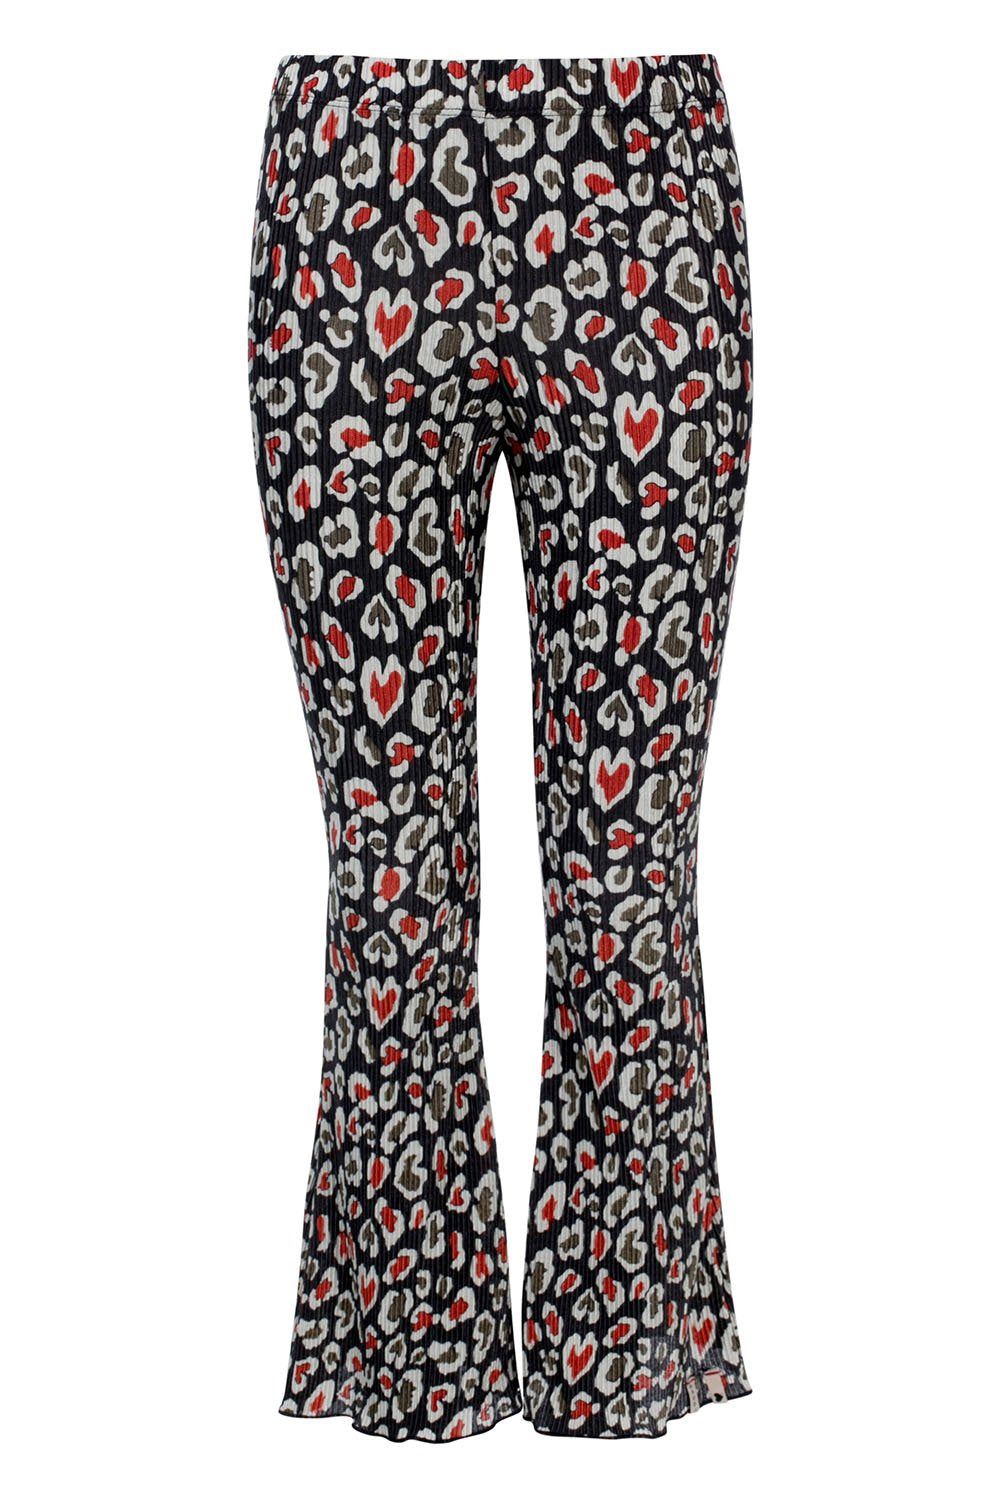 Meisjes Crinkle Flare pants van LOOXS 10sixteen in de kleur FANCY BEAST AO in maat 176.